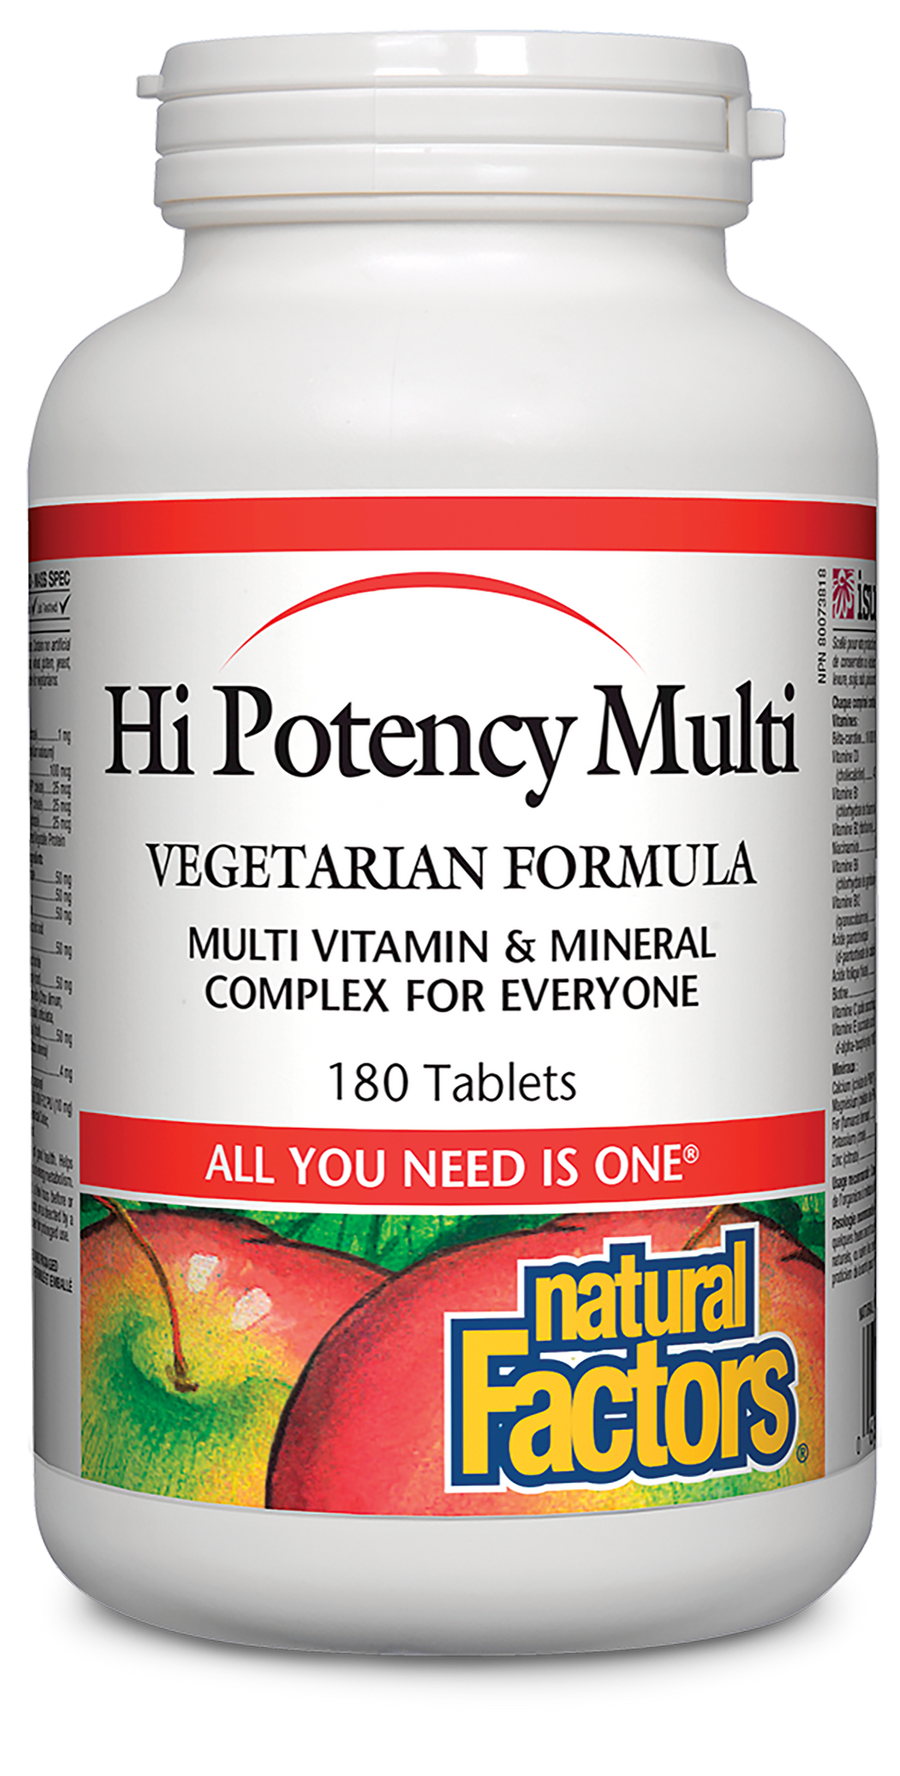 Natural Factors Hi Potency Multi Vegetarian Formula 180 Tablets